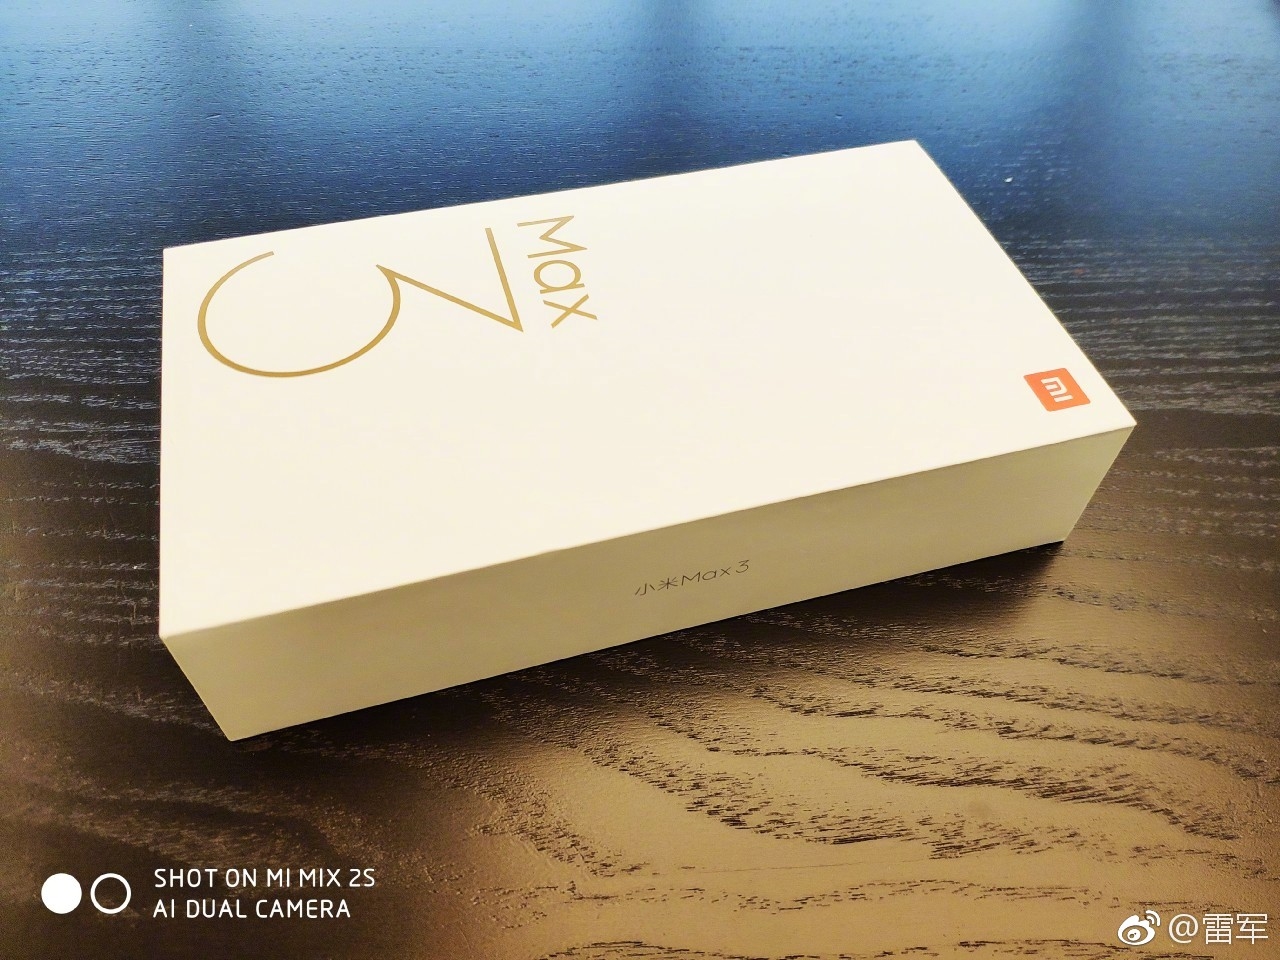 Xiaomi CEO'su Lei Jun, Mi Max 3'ün kutusunu paylaştı